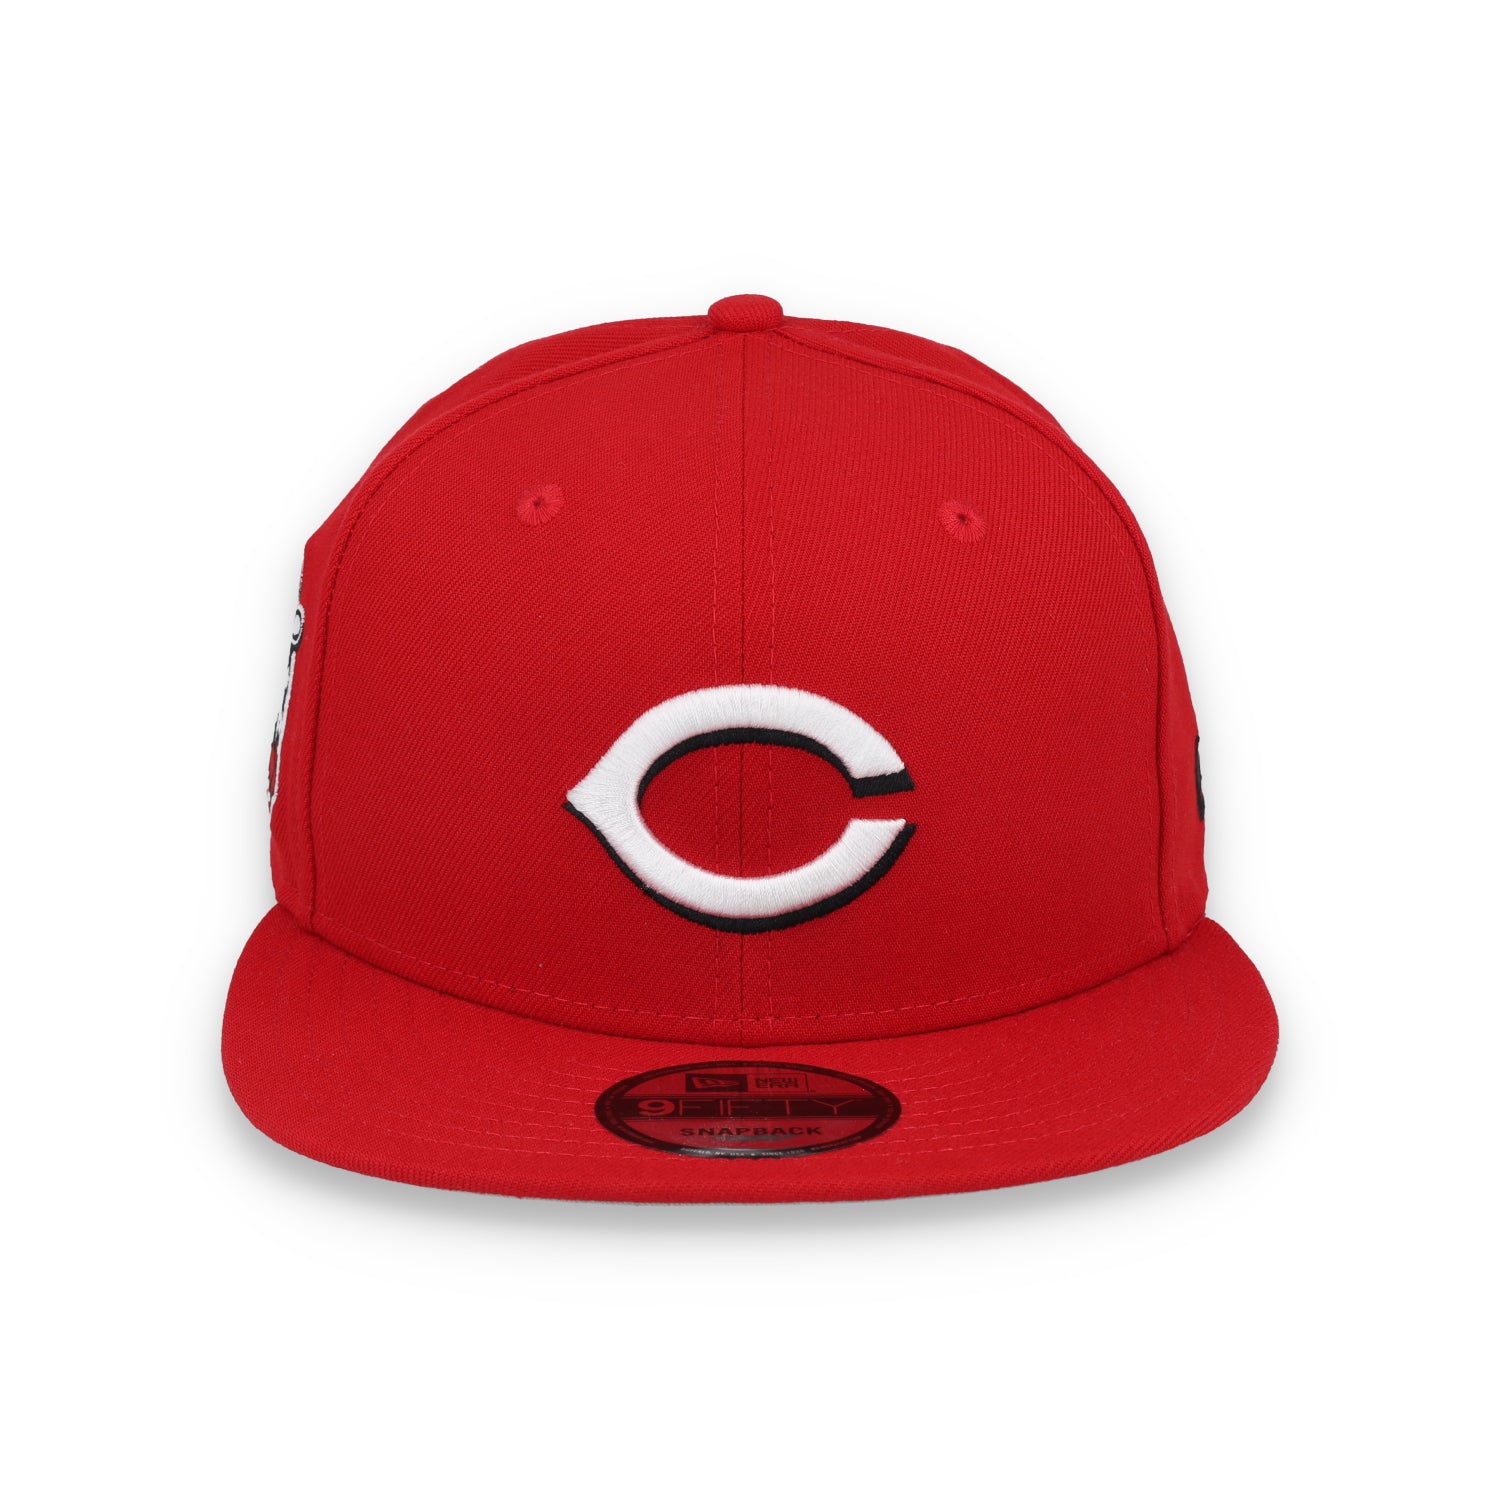 New Era Cincinnati Reds Patch E3 9FIFTY Snapback Hat